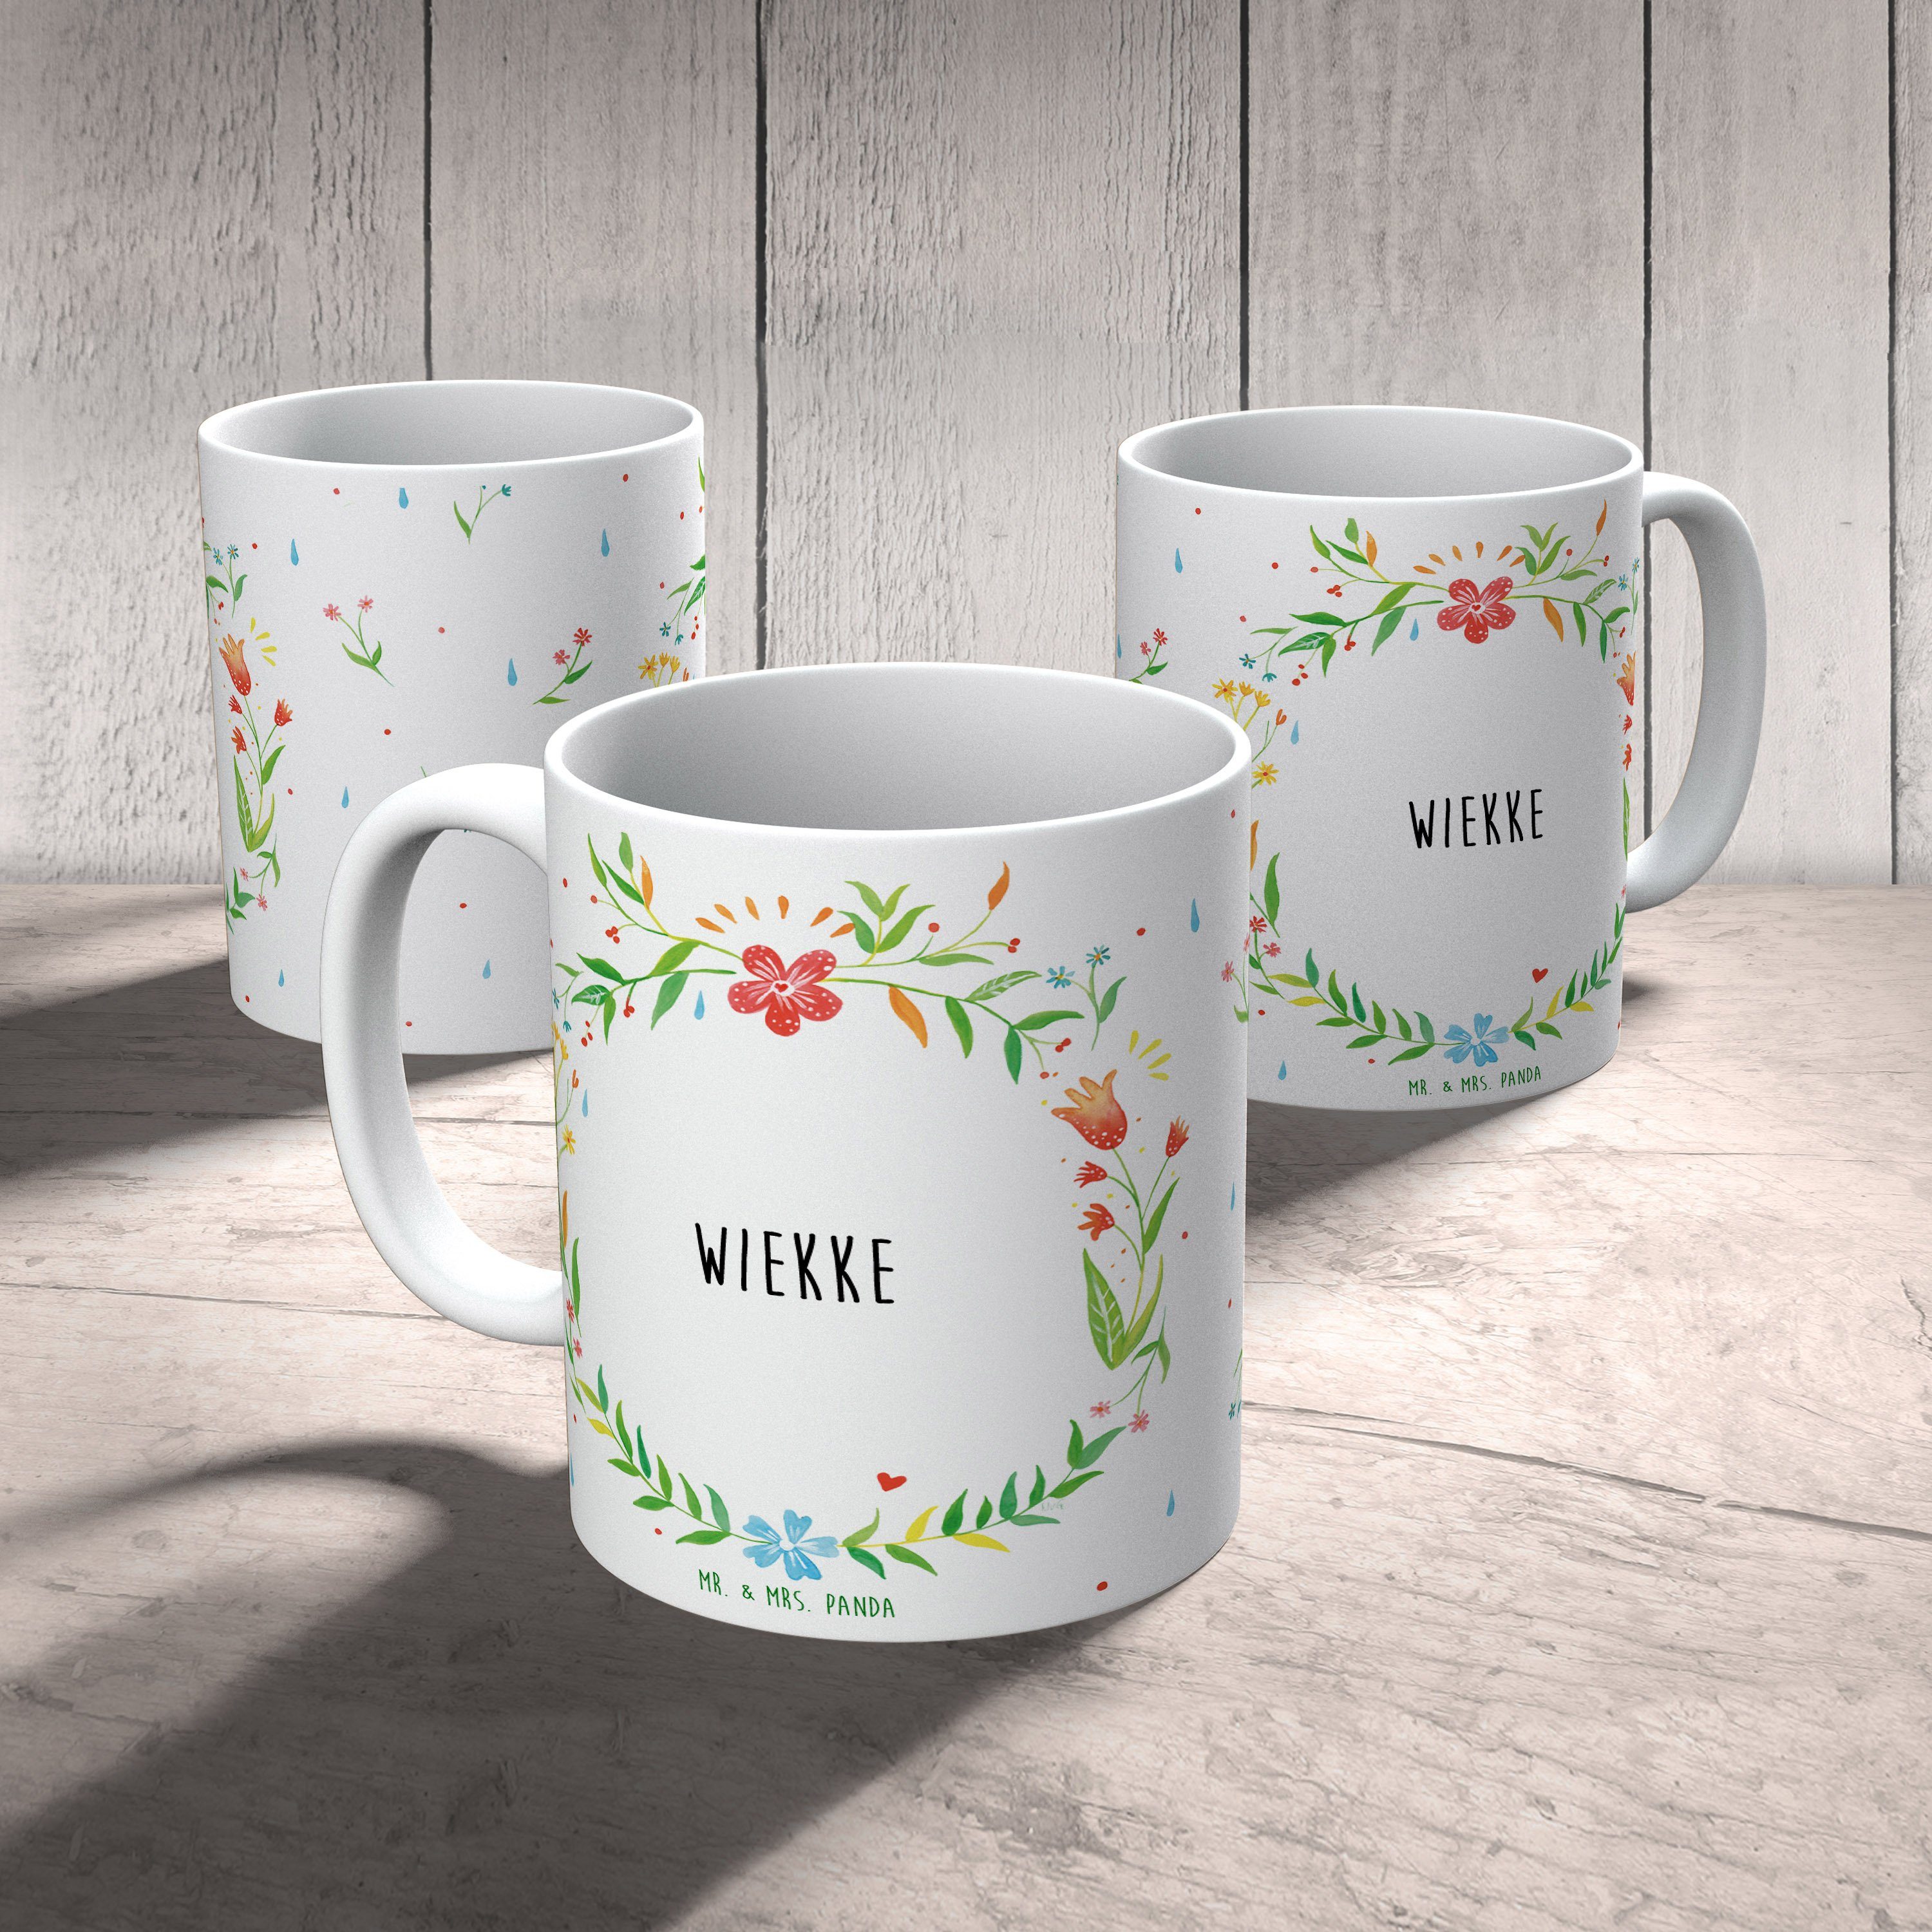 Panda - Teetasse, Mrs. & Kaffeetasse, Mr. Wiekke Sprüche, Gesc, Keramik Tasse Tasse Geschenk, Becher,